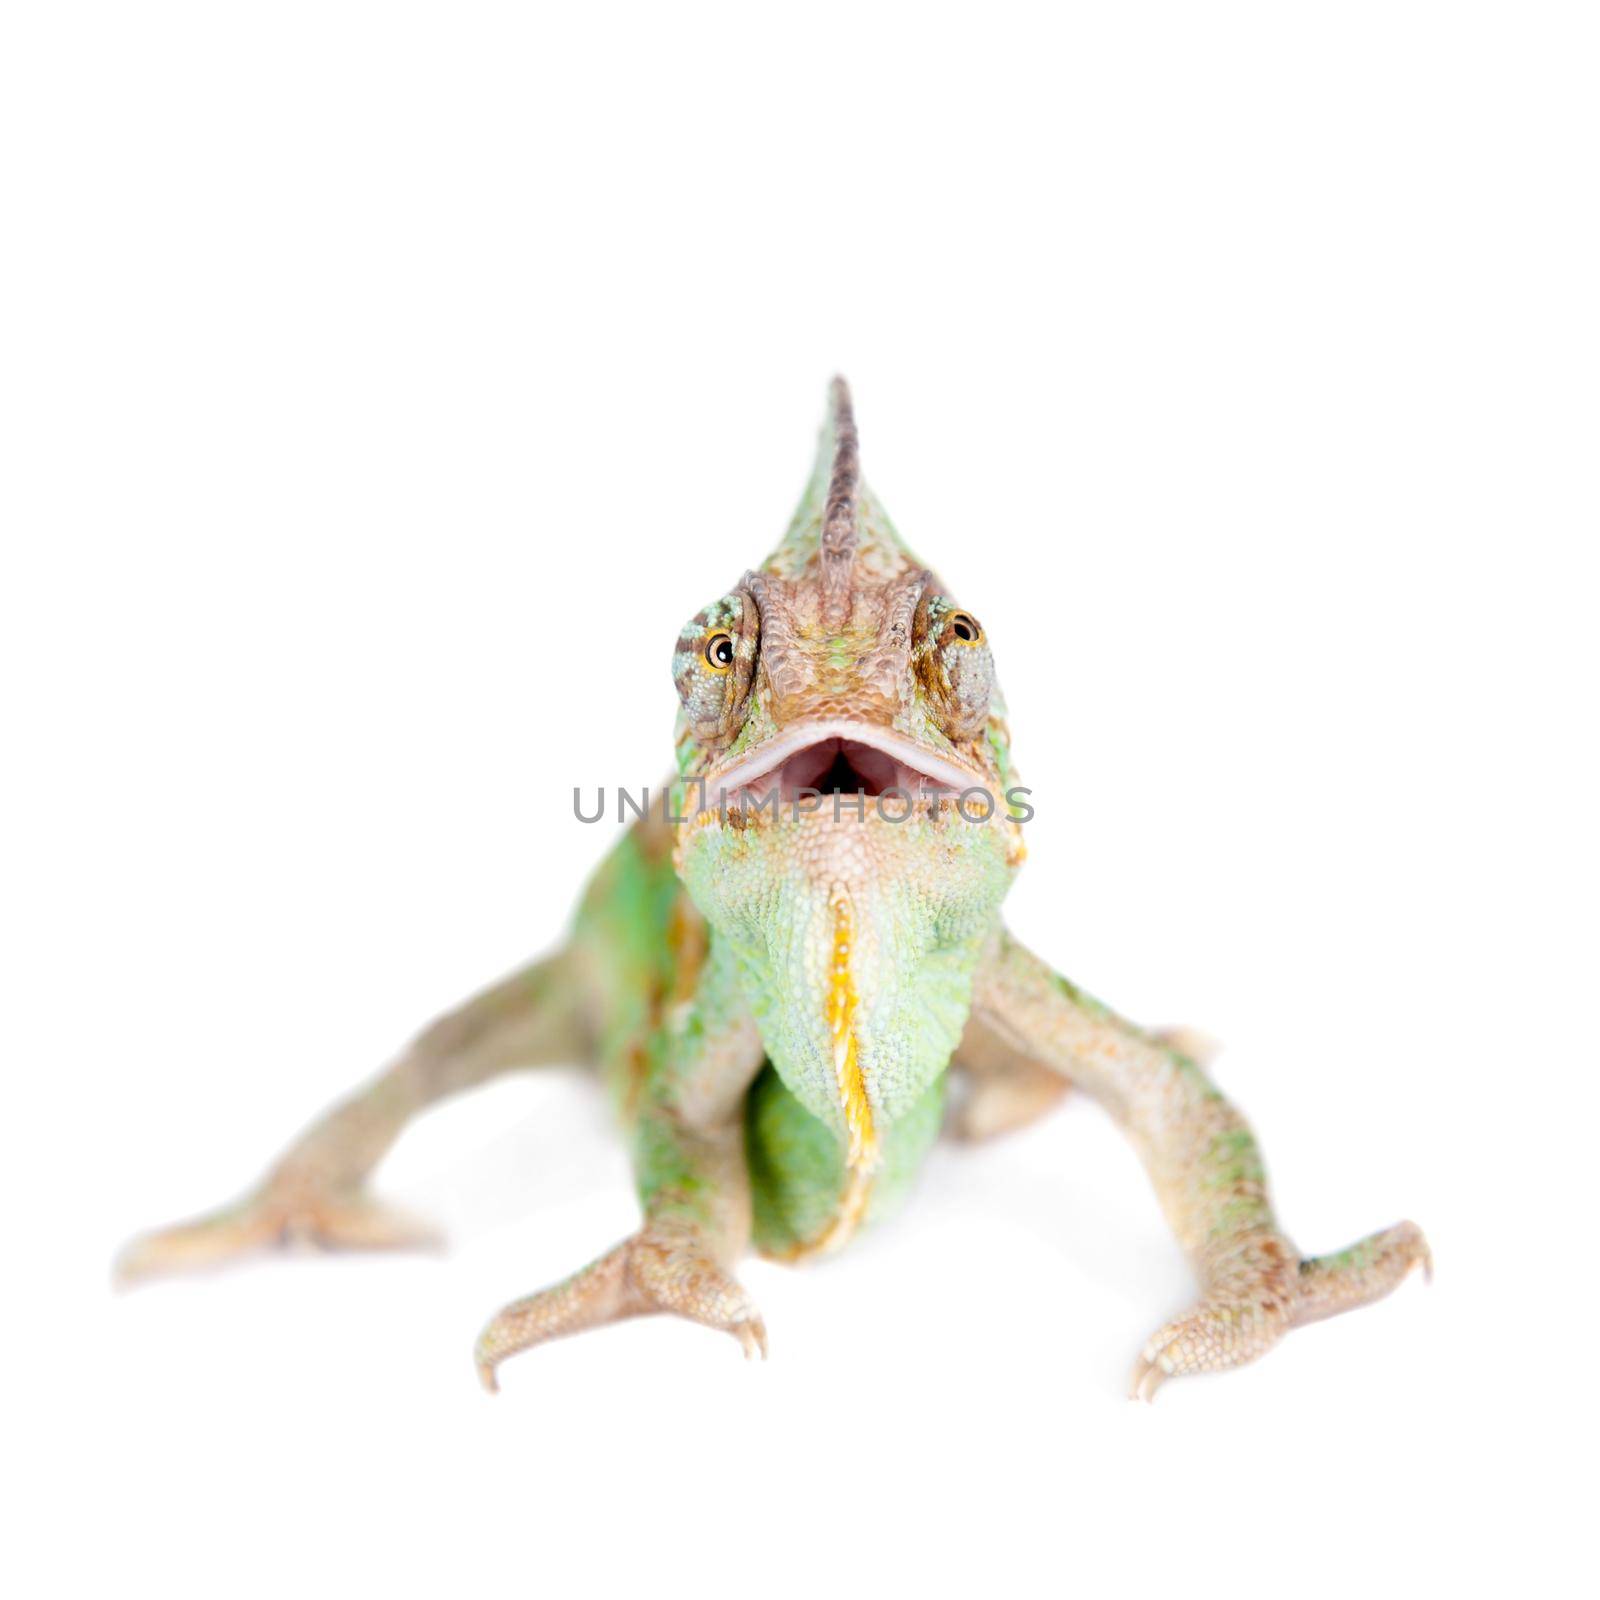 The veiled chameleon, Chamaeleo calyptratus, male by RosaJay